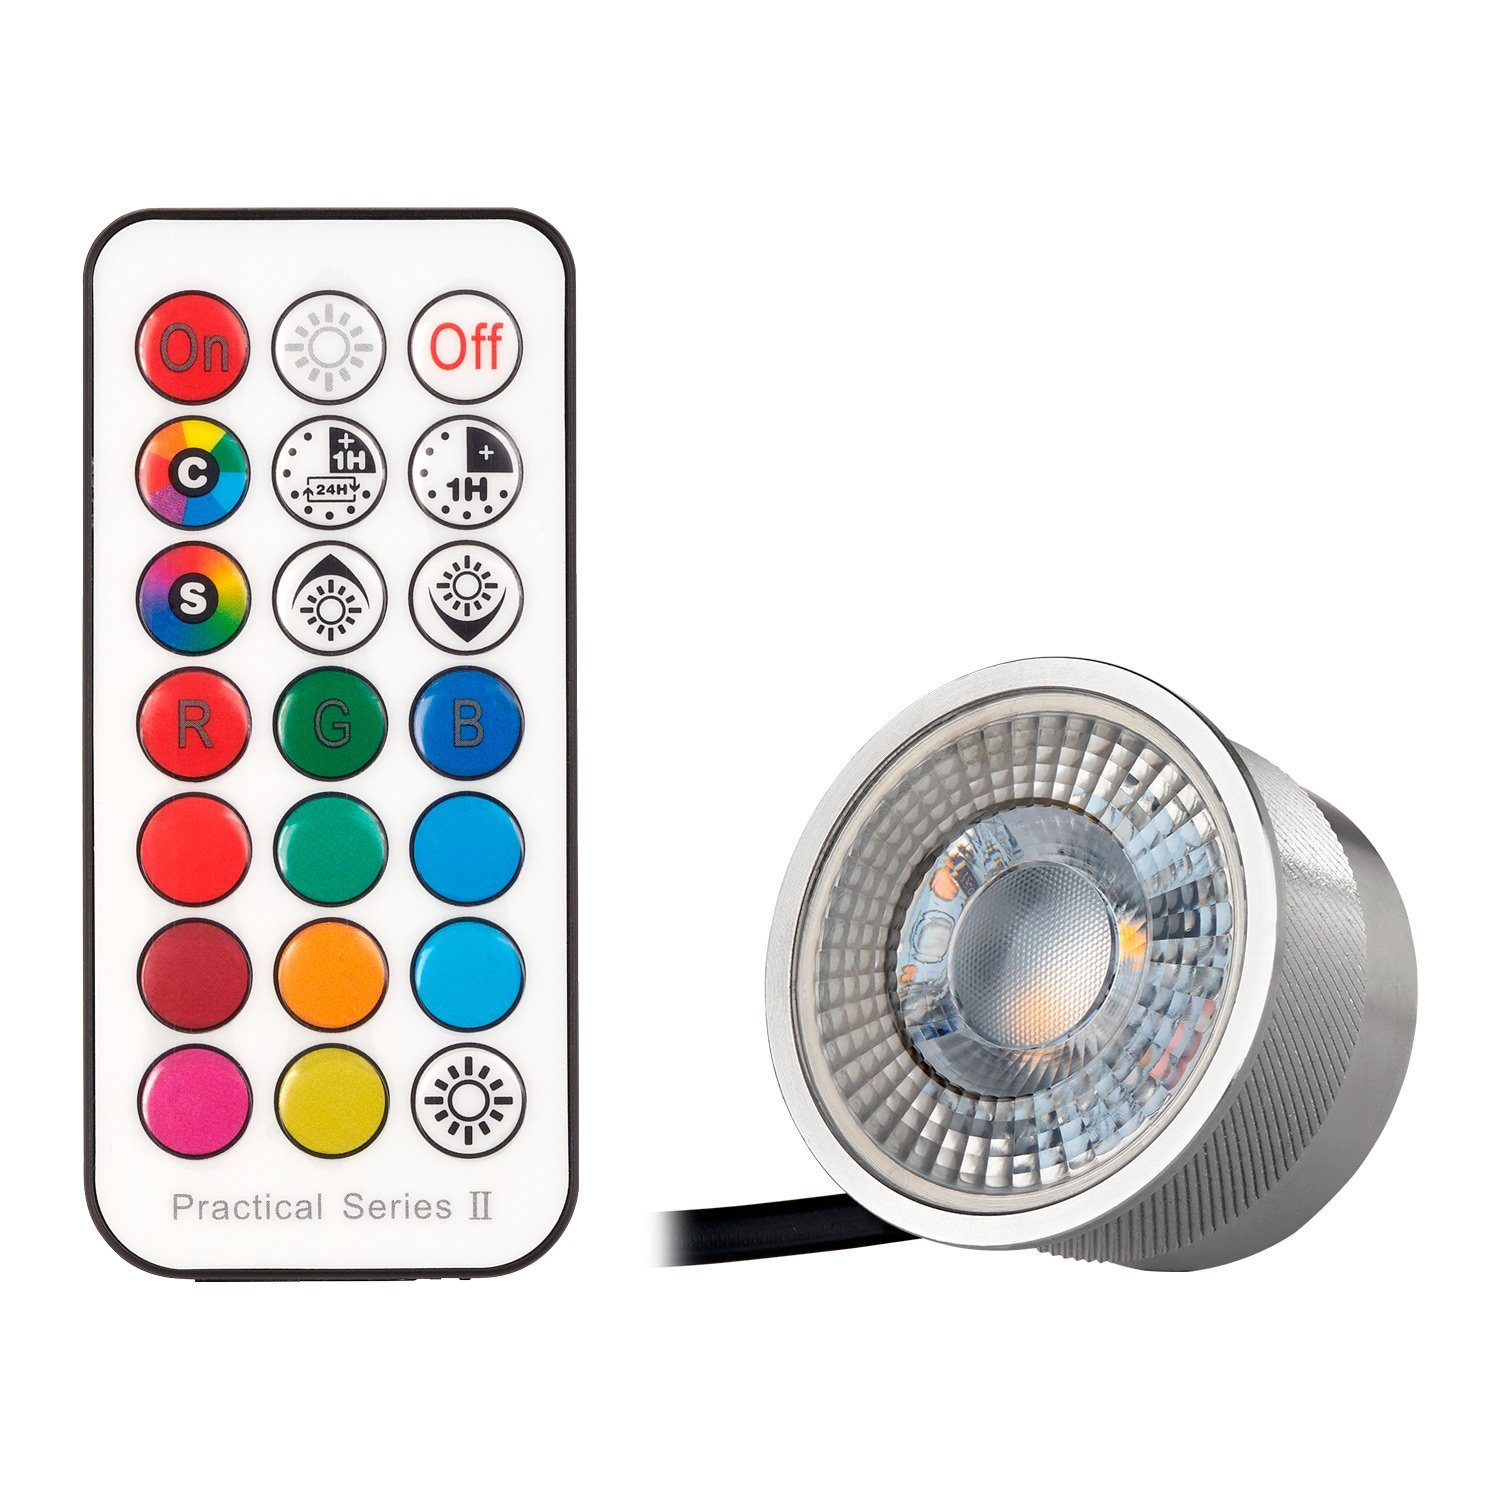 LEDANDO LED Einbaustrahler 10er RGB LED extra in Set 3W flach LED vo Einbaustrahler weiß matt mit